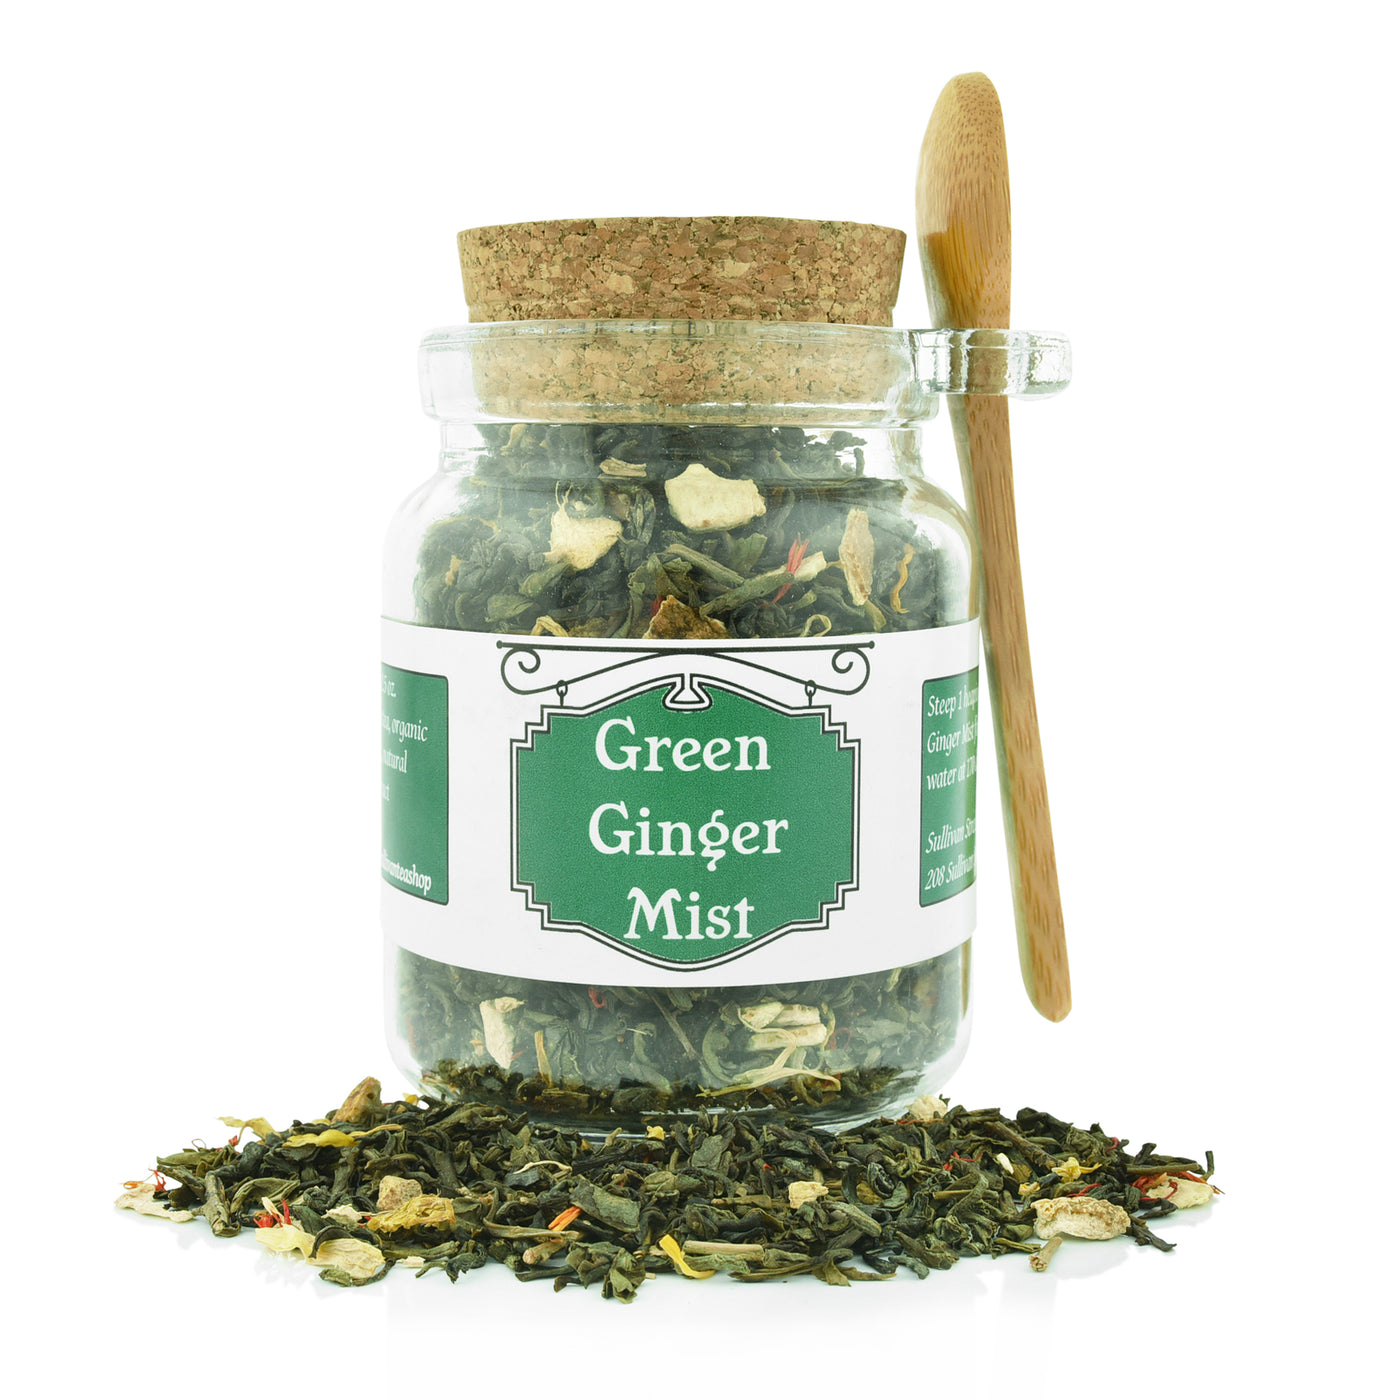 Green Ginger Mist Gift Jar - Sullivan Street Tea & Spice Company